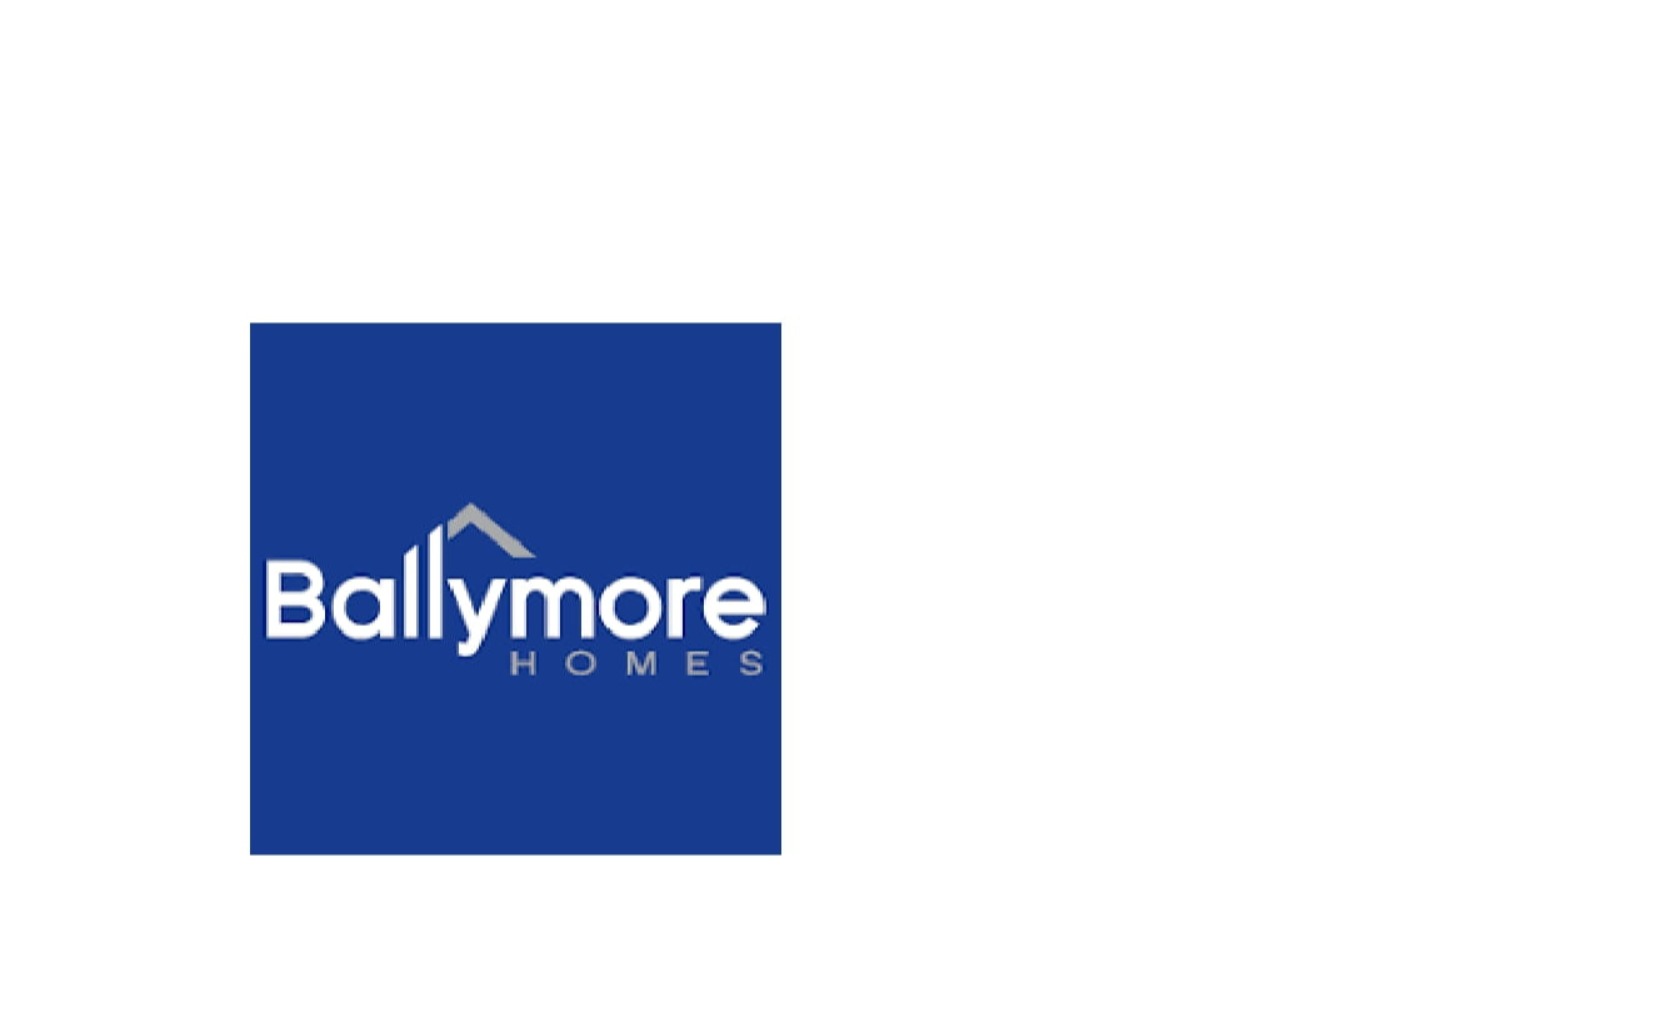 Ballymore Homes